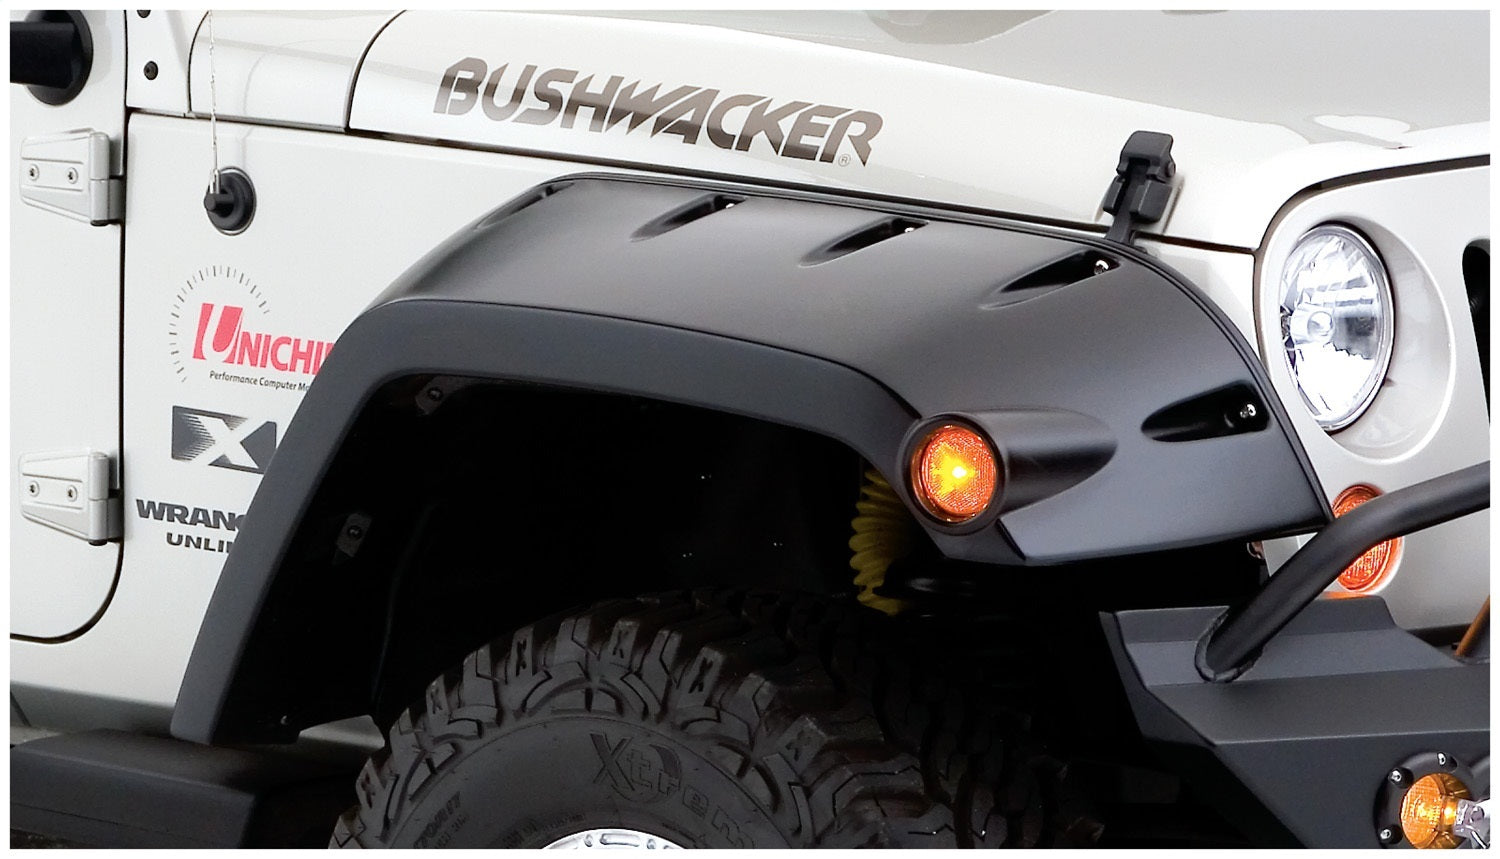 Bushwacker 10045-02 Black Max Coverage Pocket/Rivet Style Smooth Finish Front Fender Flares with Extended Coverage for 2007-2018 Jeep Wrangler JK